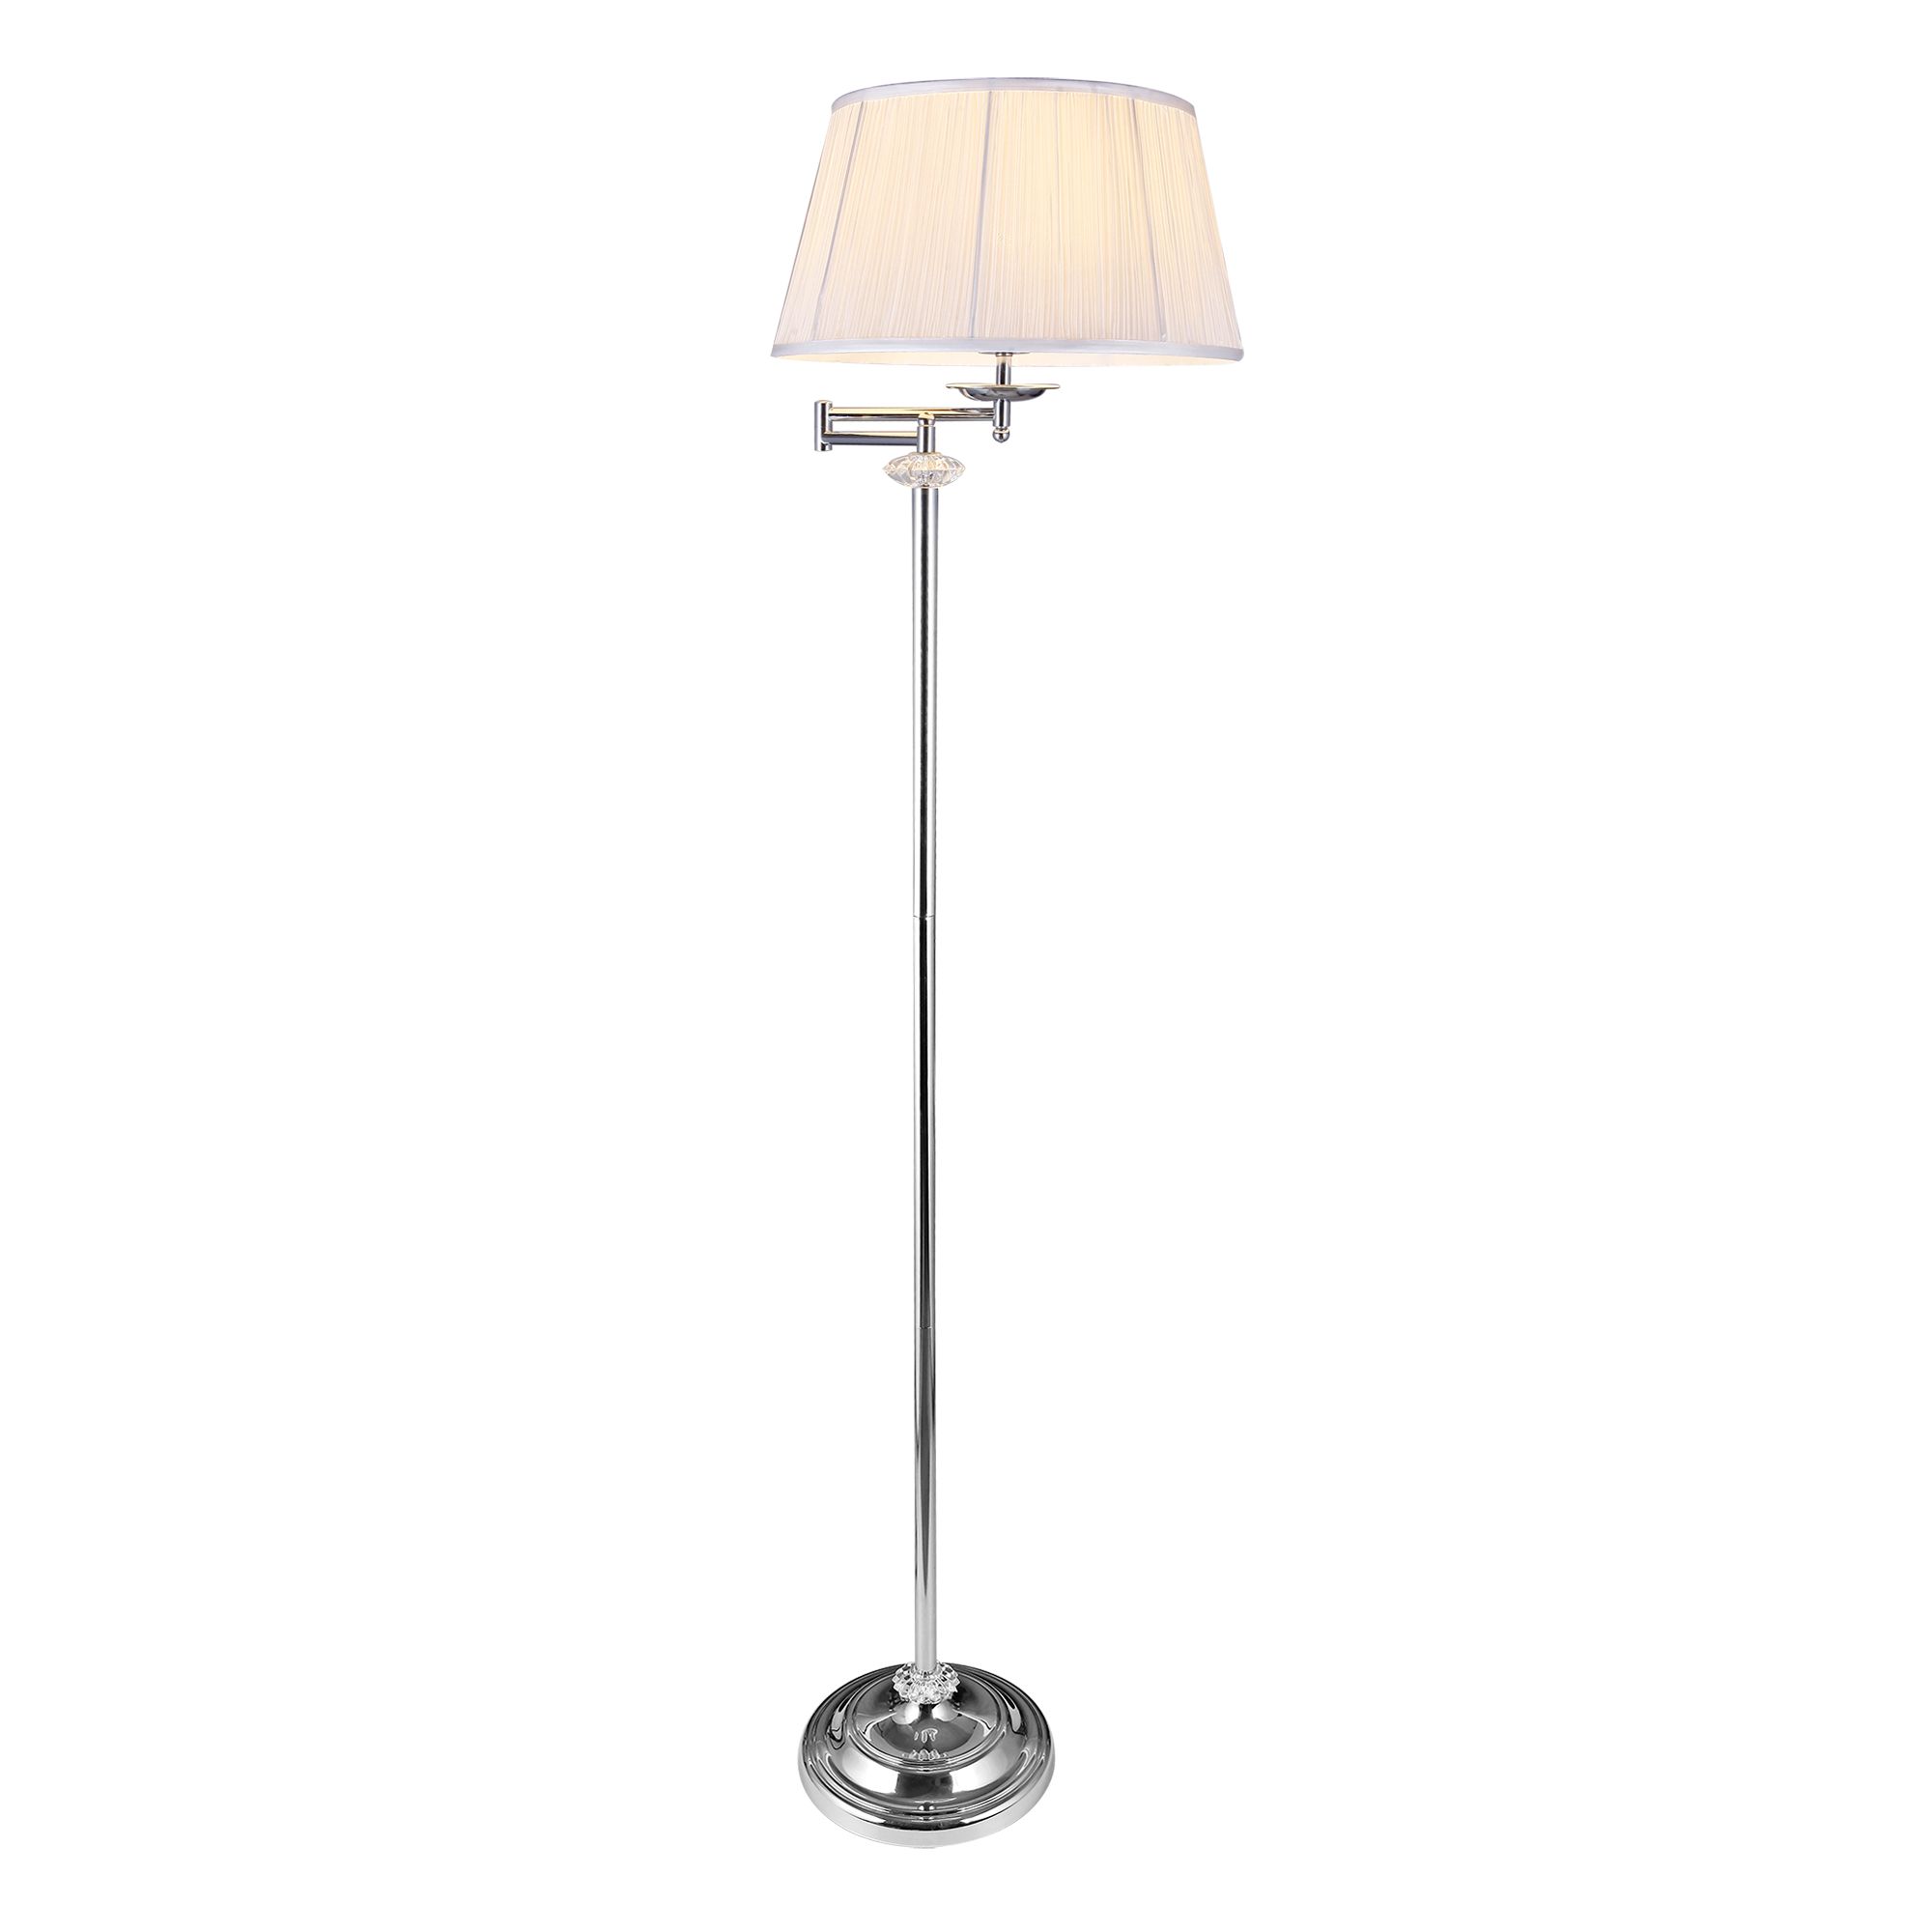 [lux.pro] Stojací lampa \"Friedberg\" HT167498 - H.T. Trade Service GmbH & Co. KG